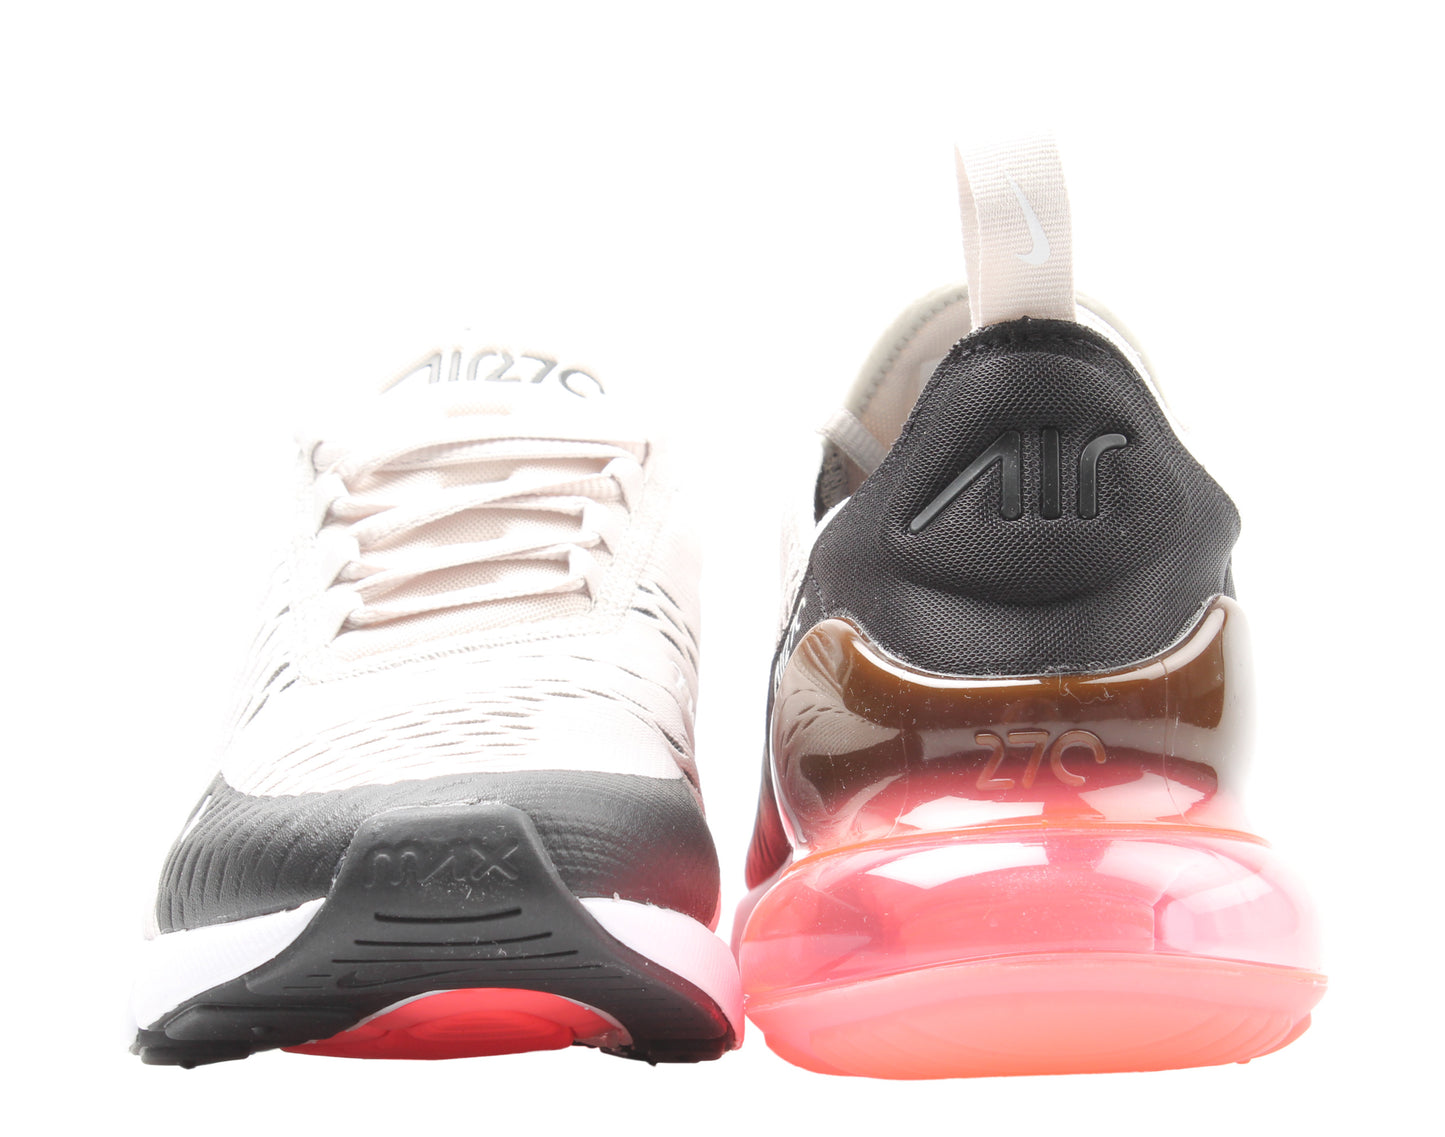 Nike Air Max 270 Black/Light Bone-Hot Punch Men's Lifestyle Shoes AH8050-003